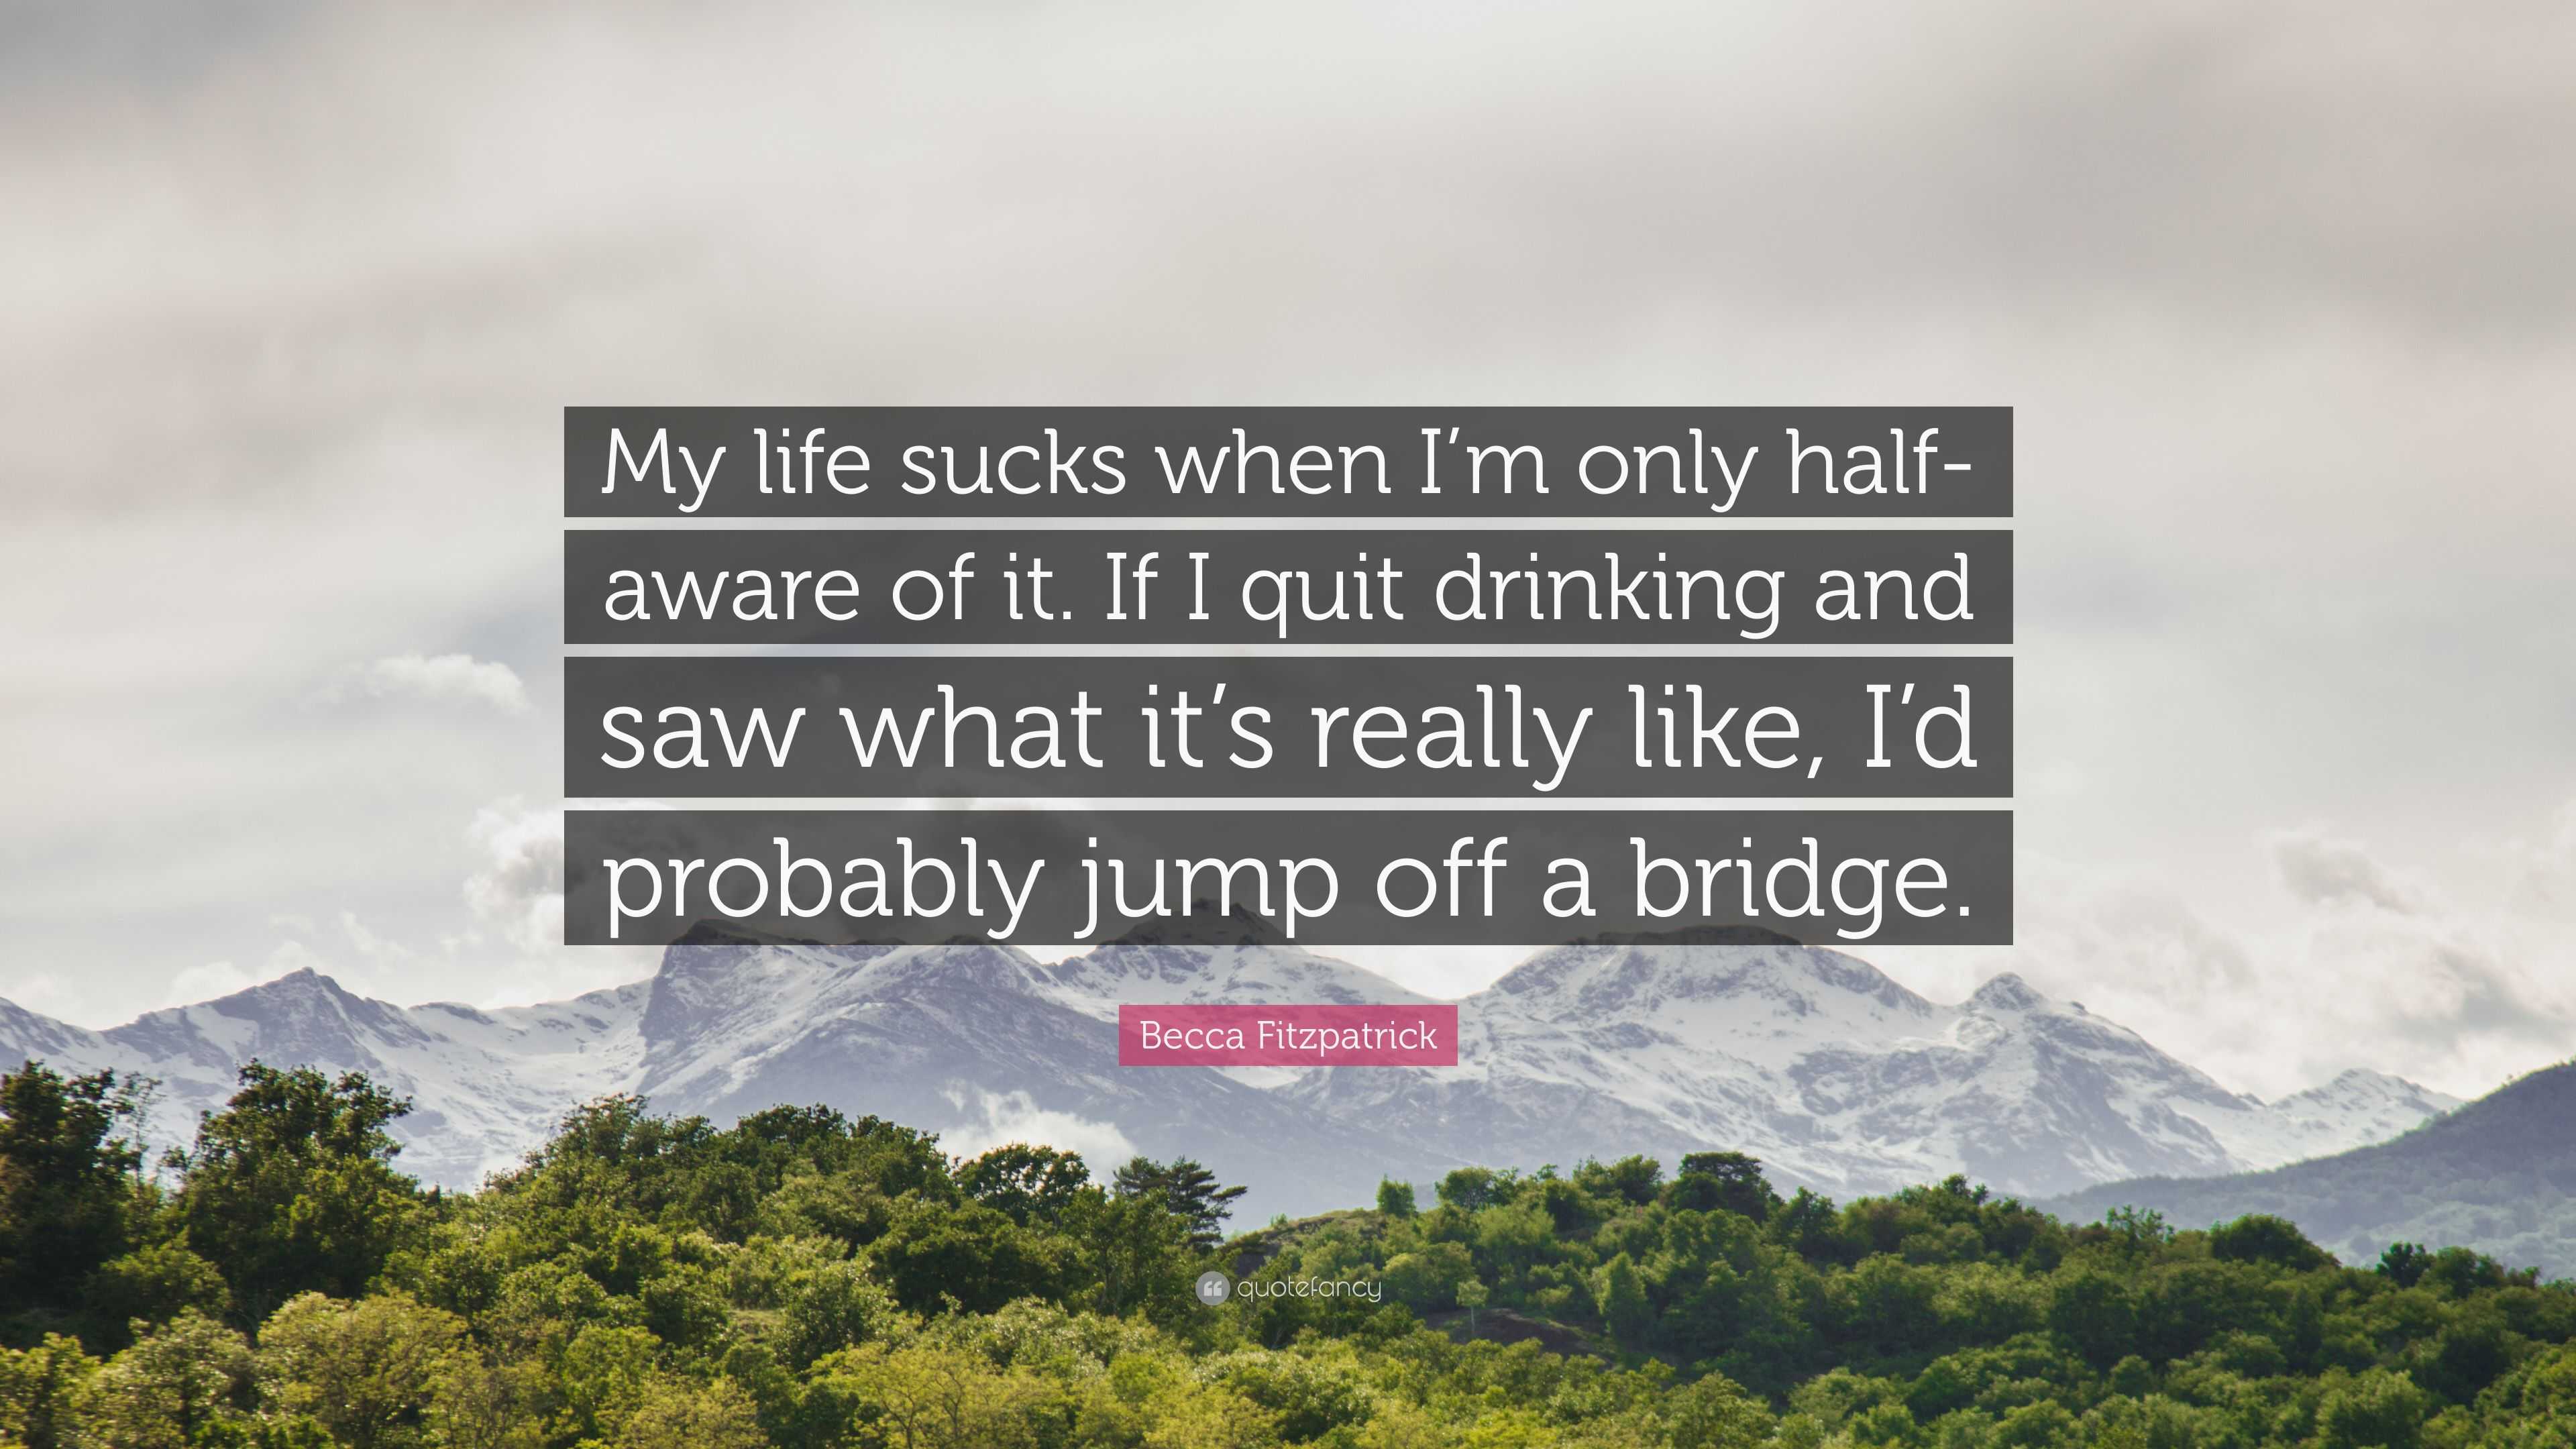 Becca Fitzpatrick Quote “My life sucks when I m only half aware